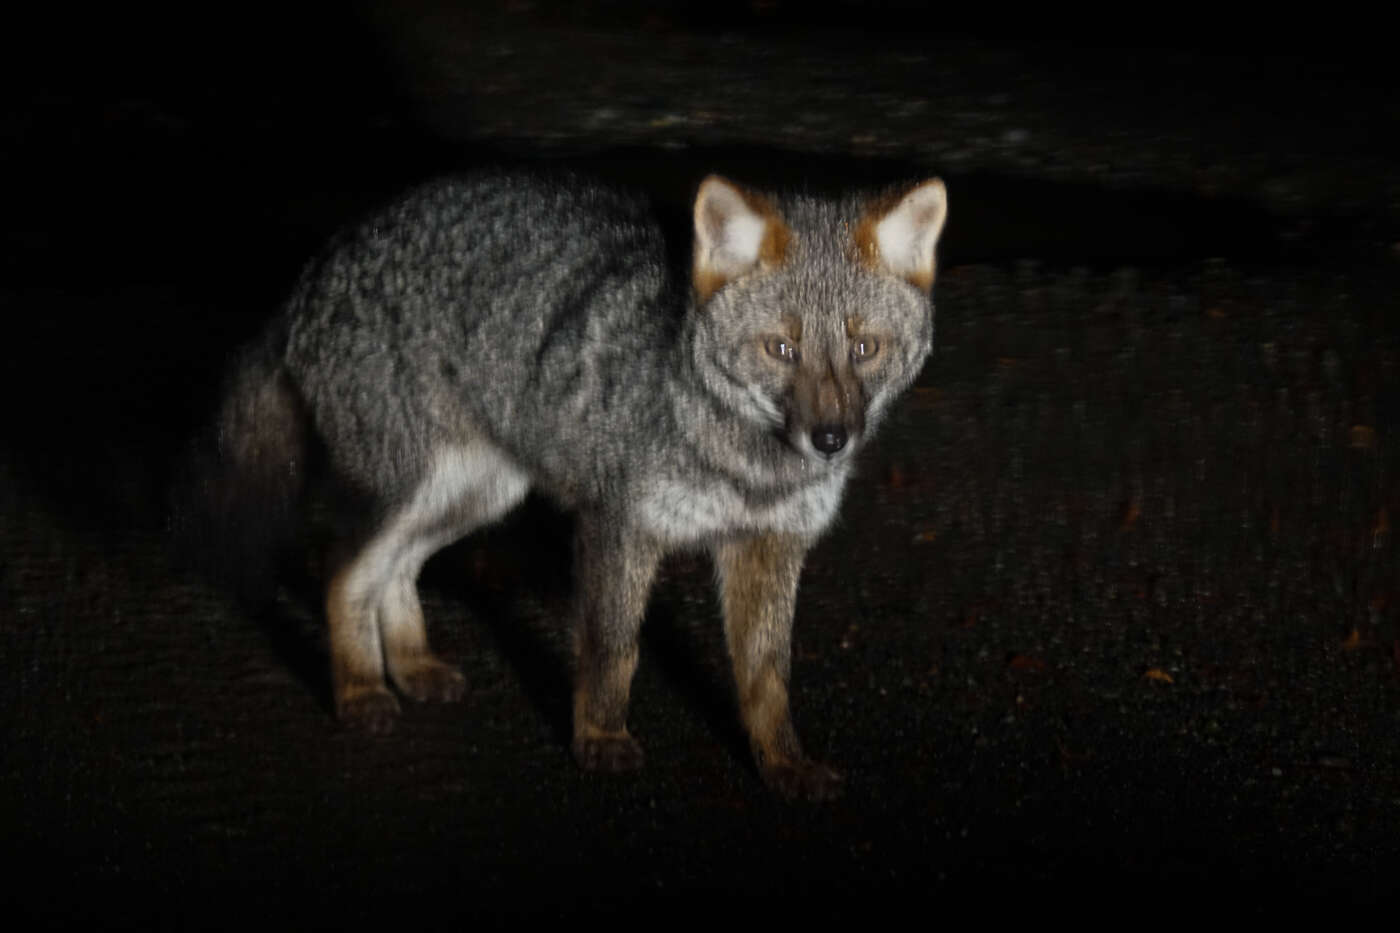 Image of Darwin's Fox